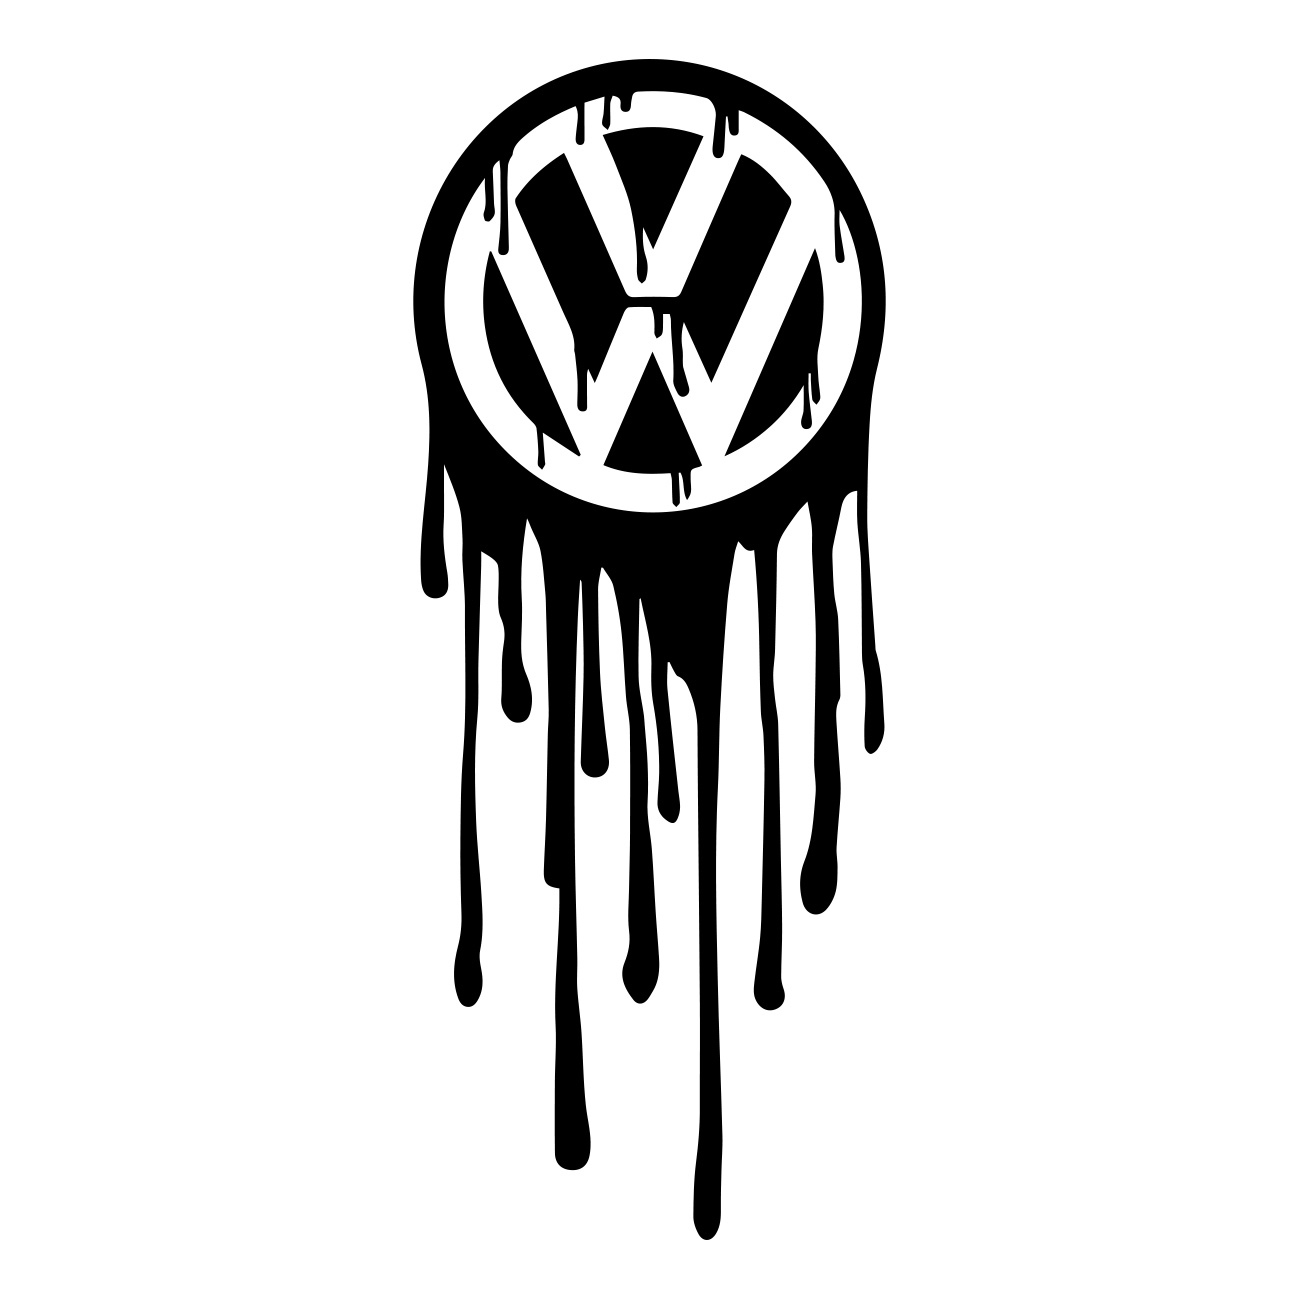 vw logo bloody - Vis alle stickers 